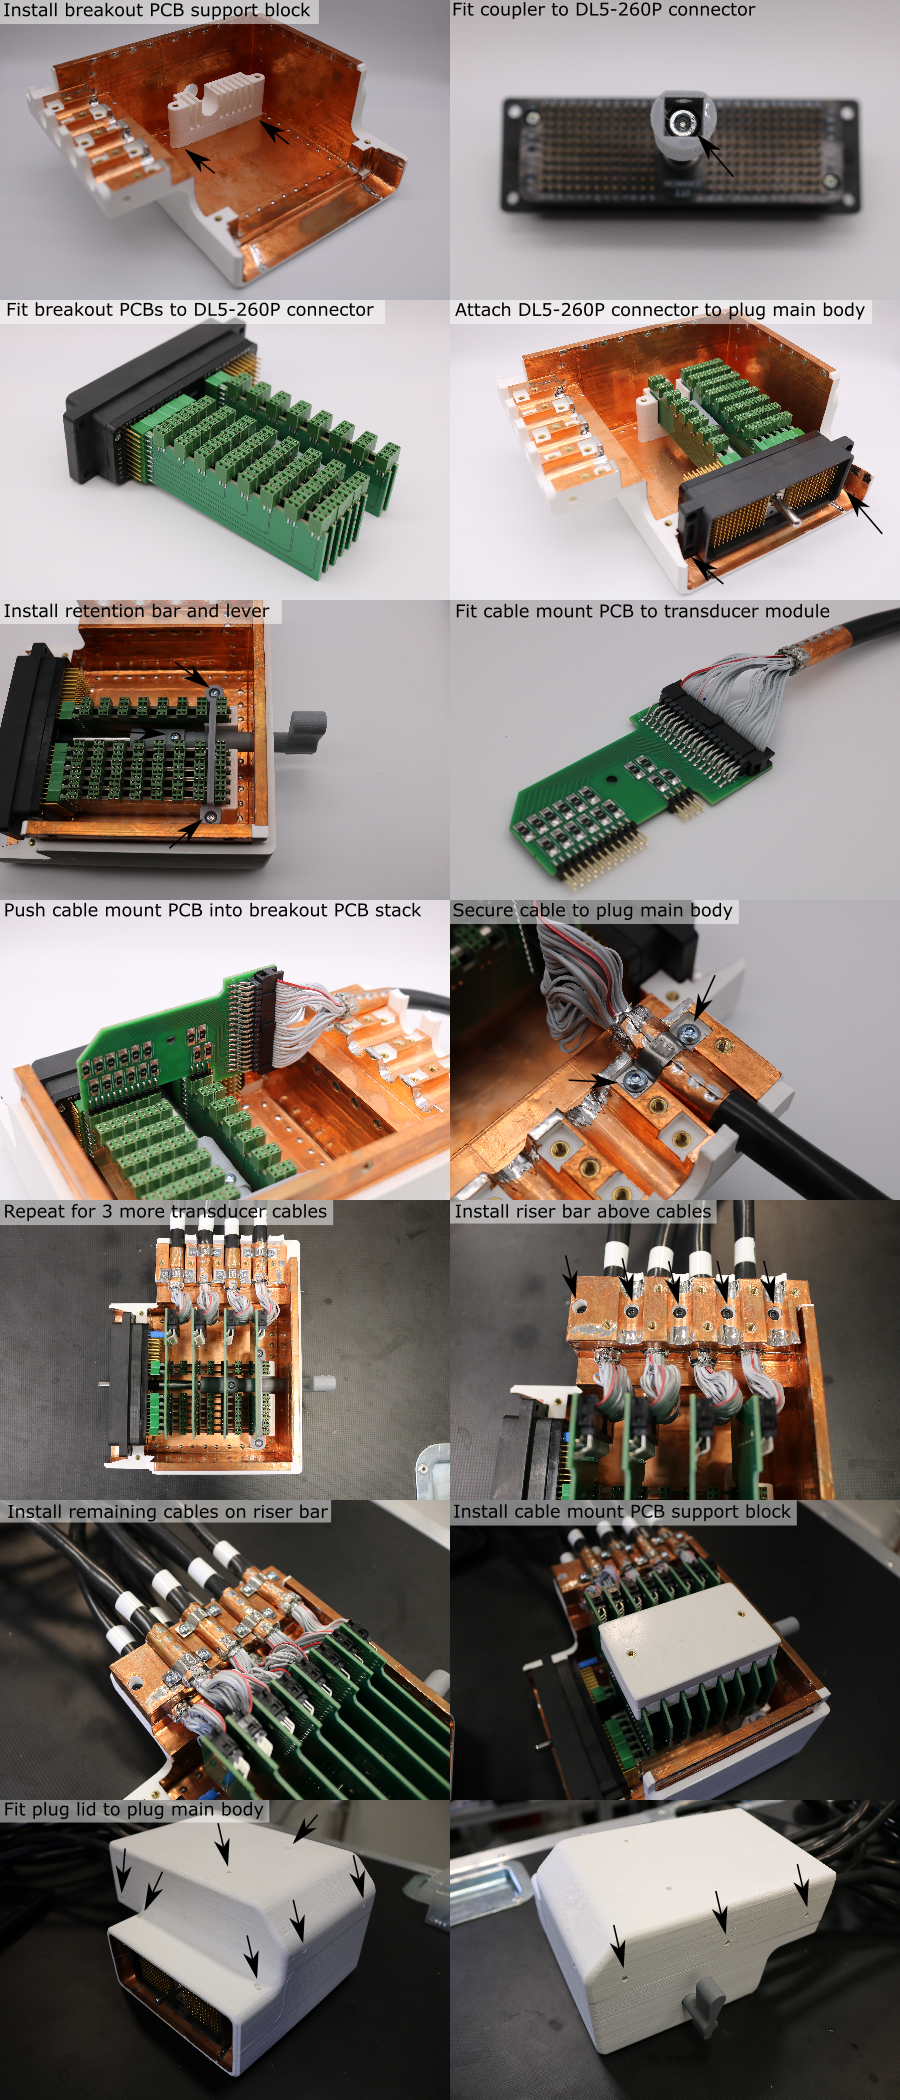 assemble-plug-components